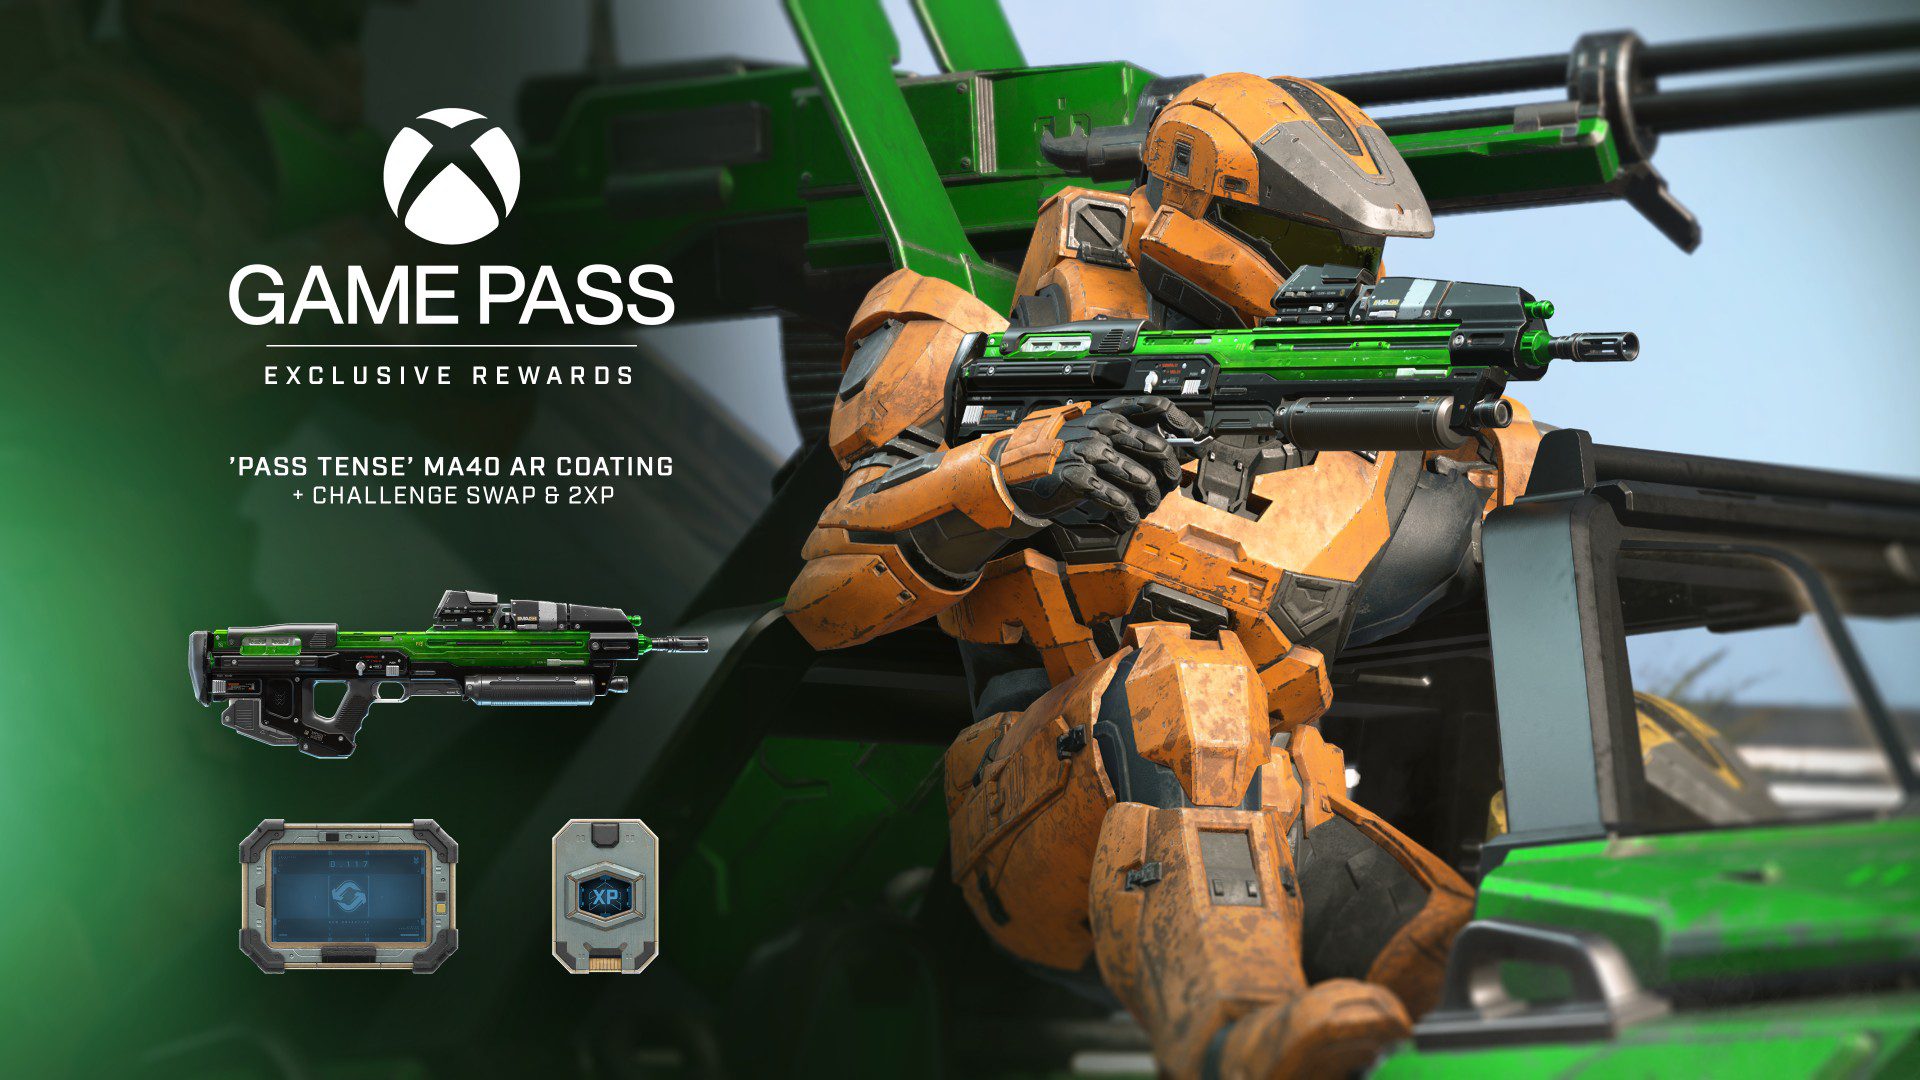 Halo Infinite Game Pass Perks